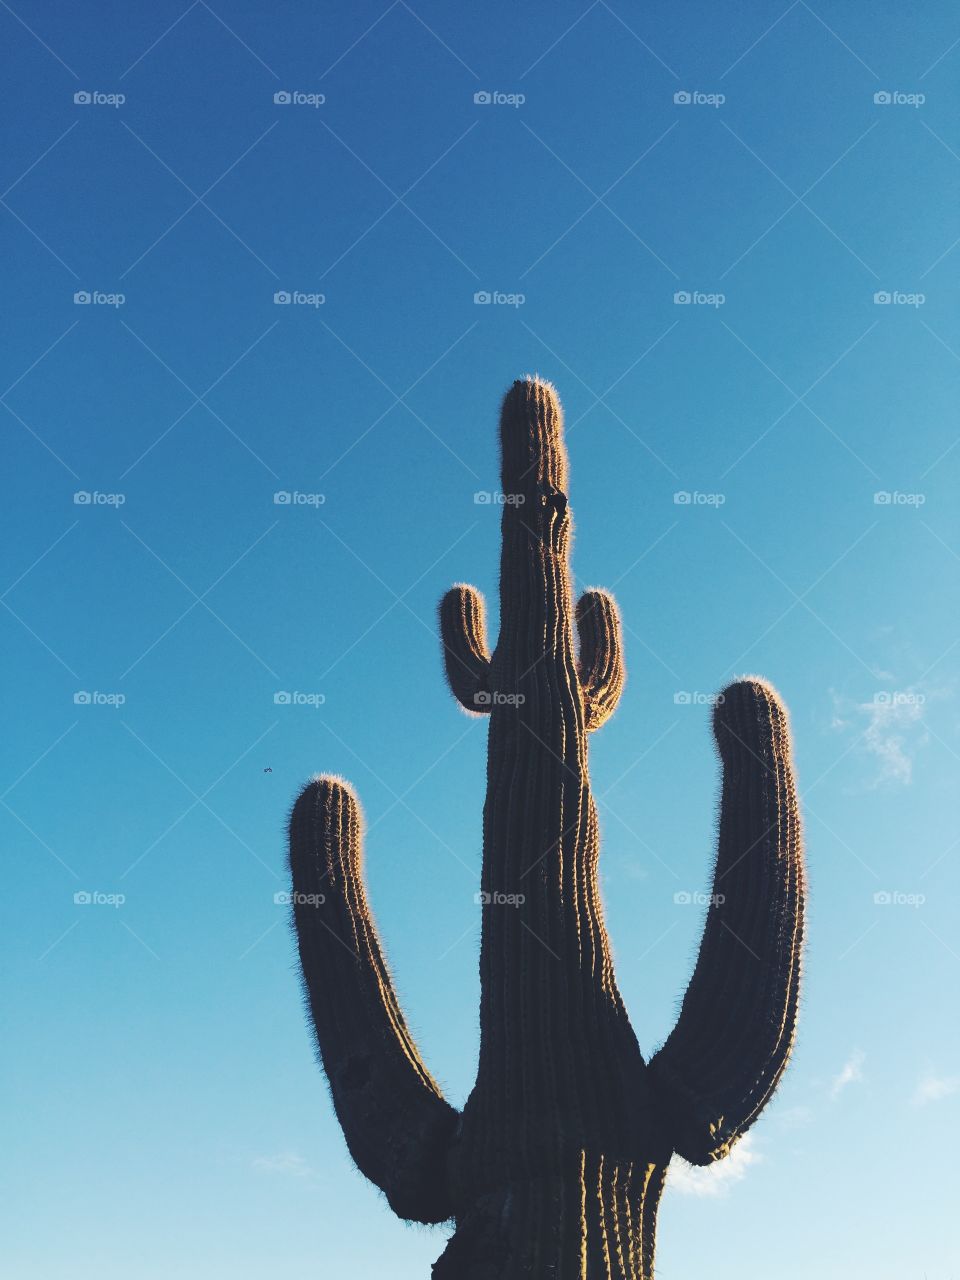 AZ Cactus 